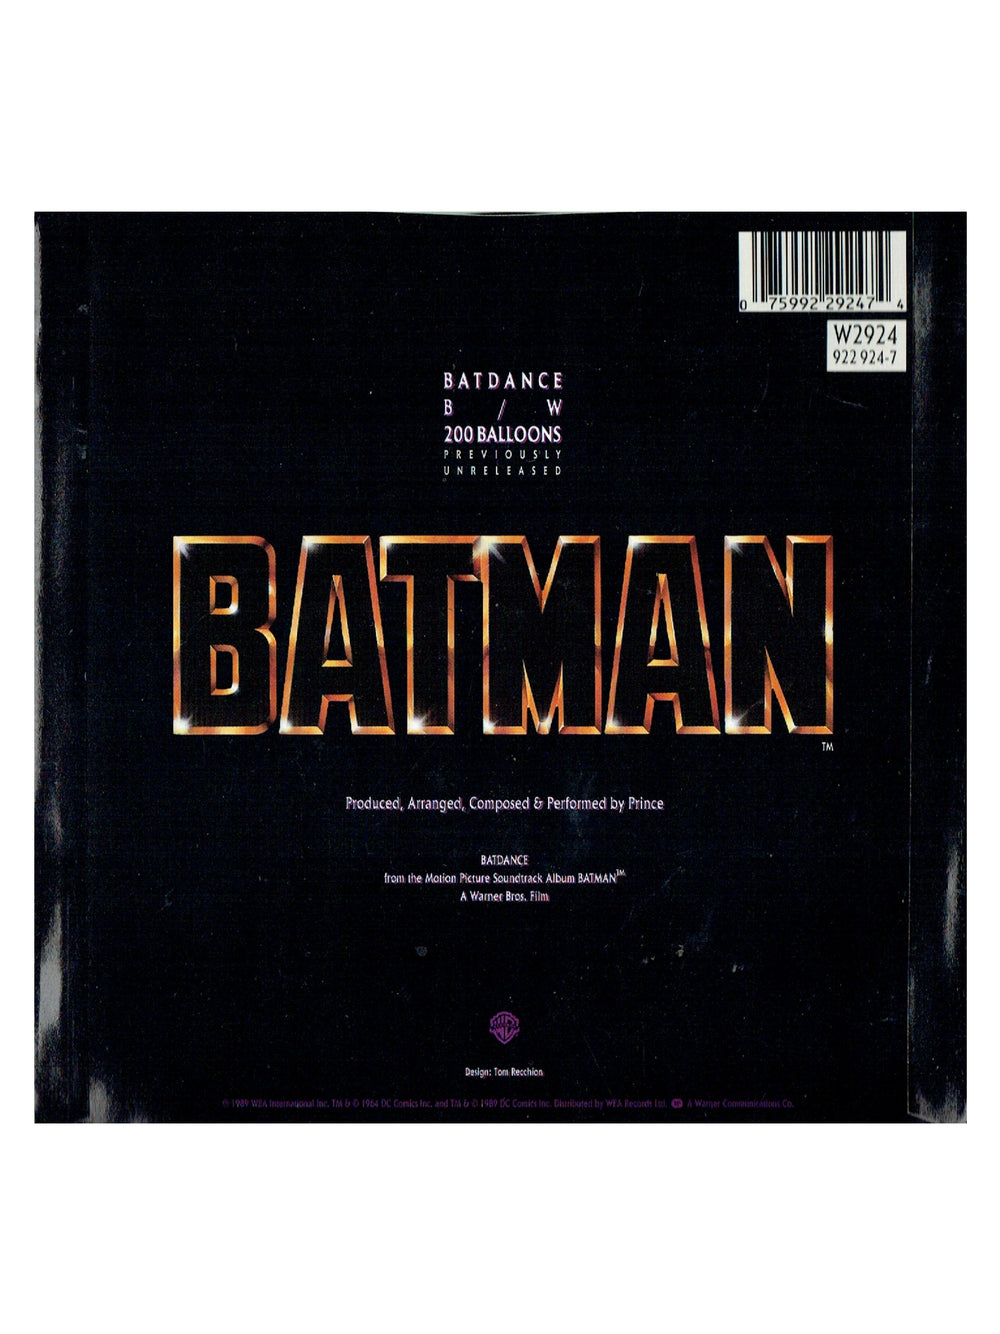 Prince Batdance 200 Balloons 7 Inch Vinyl Single 1989 UK Release SMS